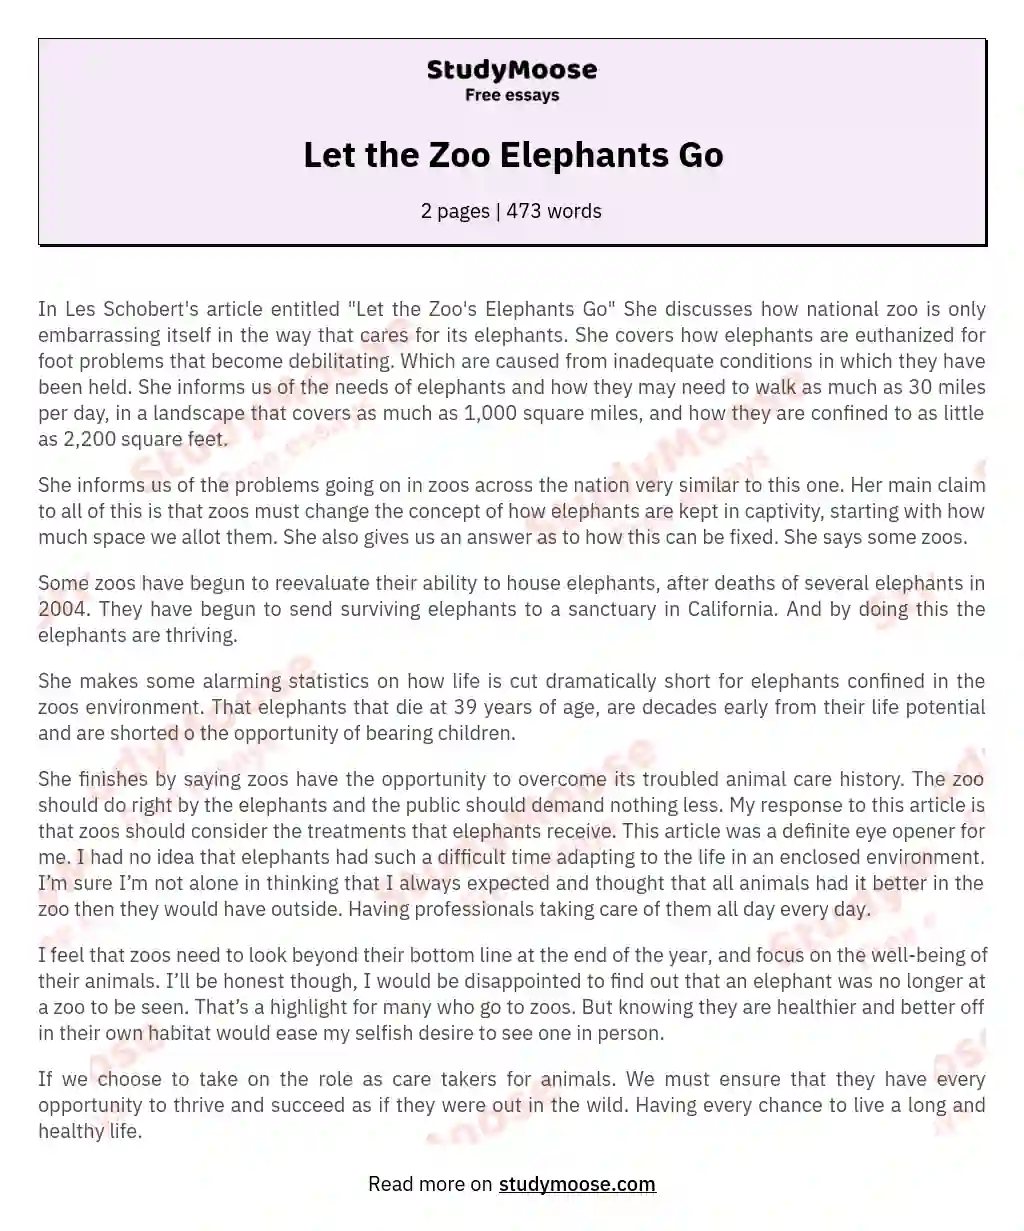 Let the Zoo Elephants Go essay